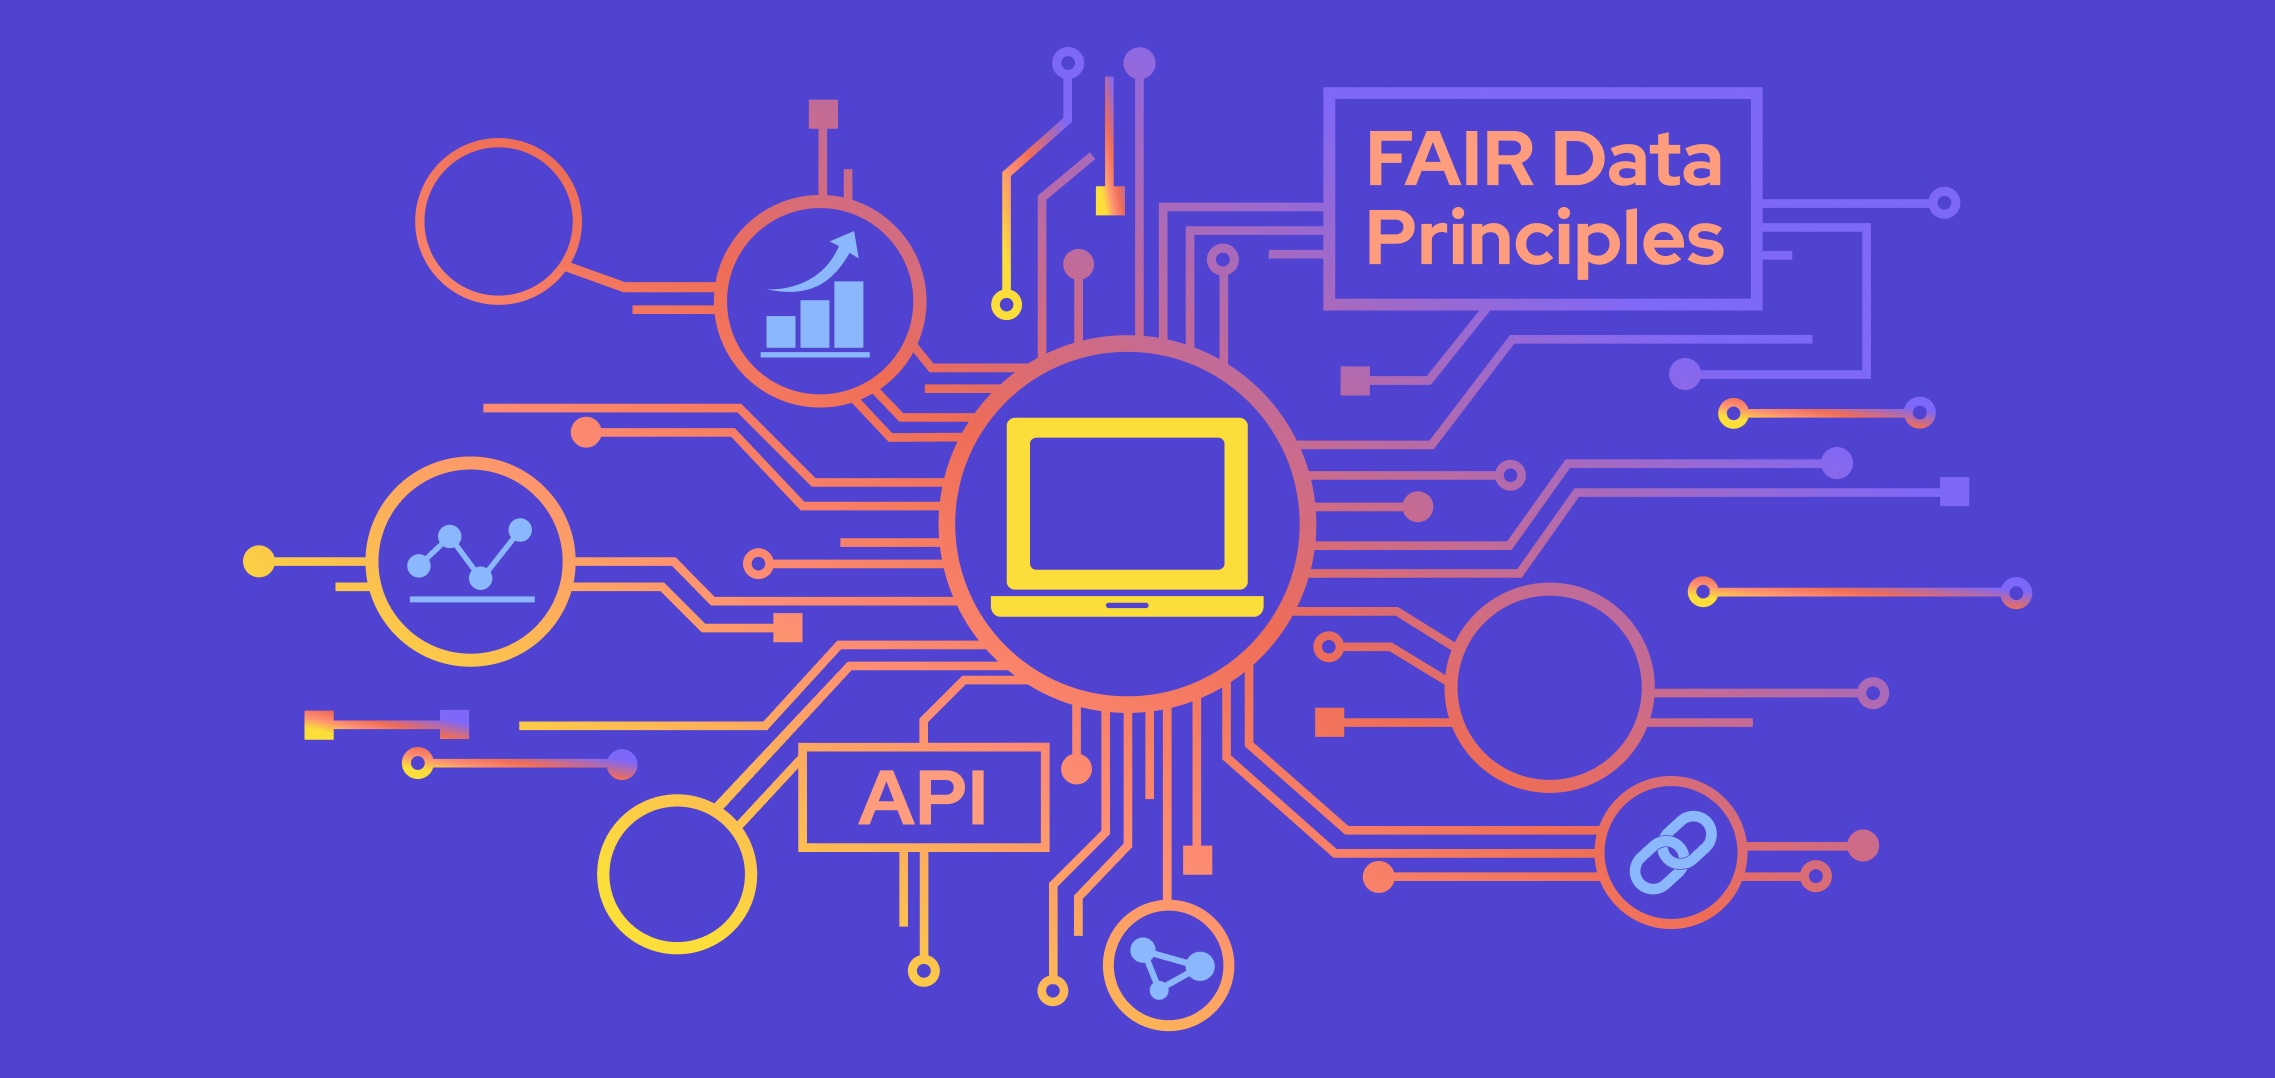 FAIR data principles and APIs